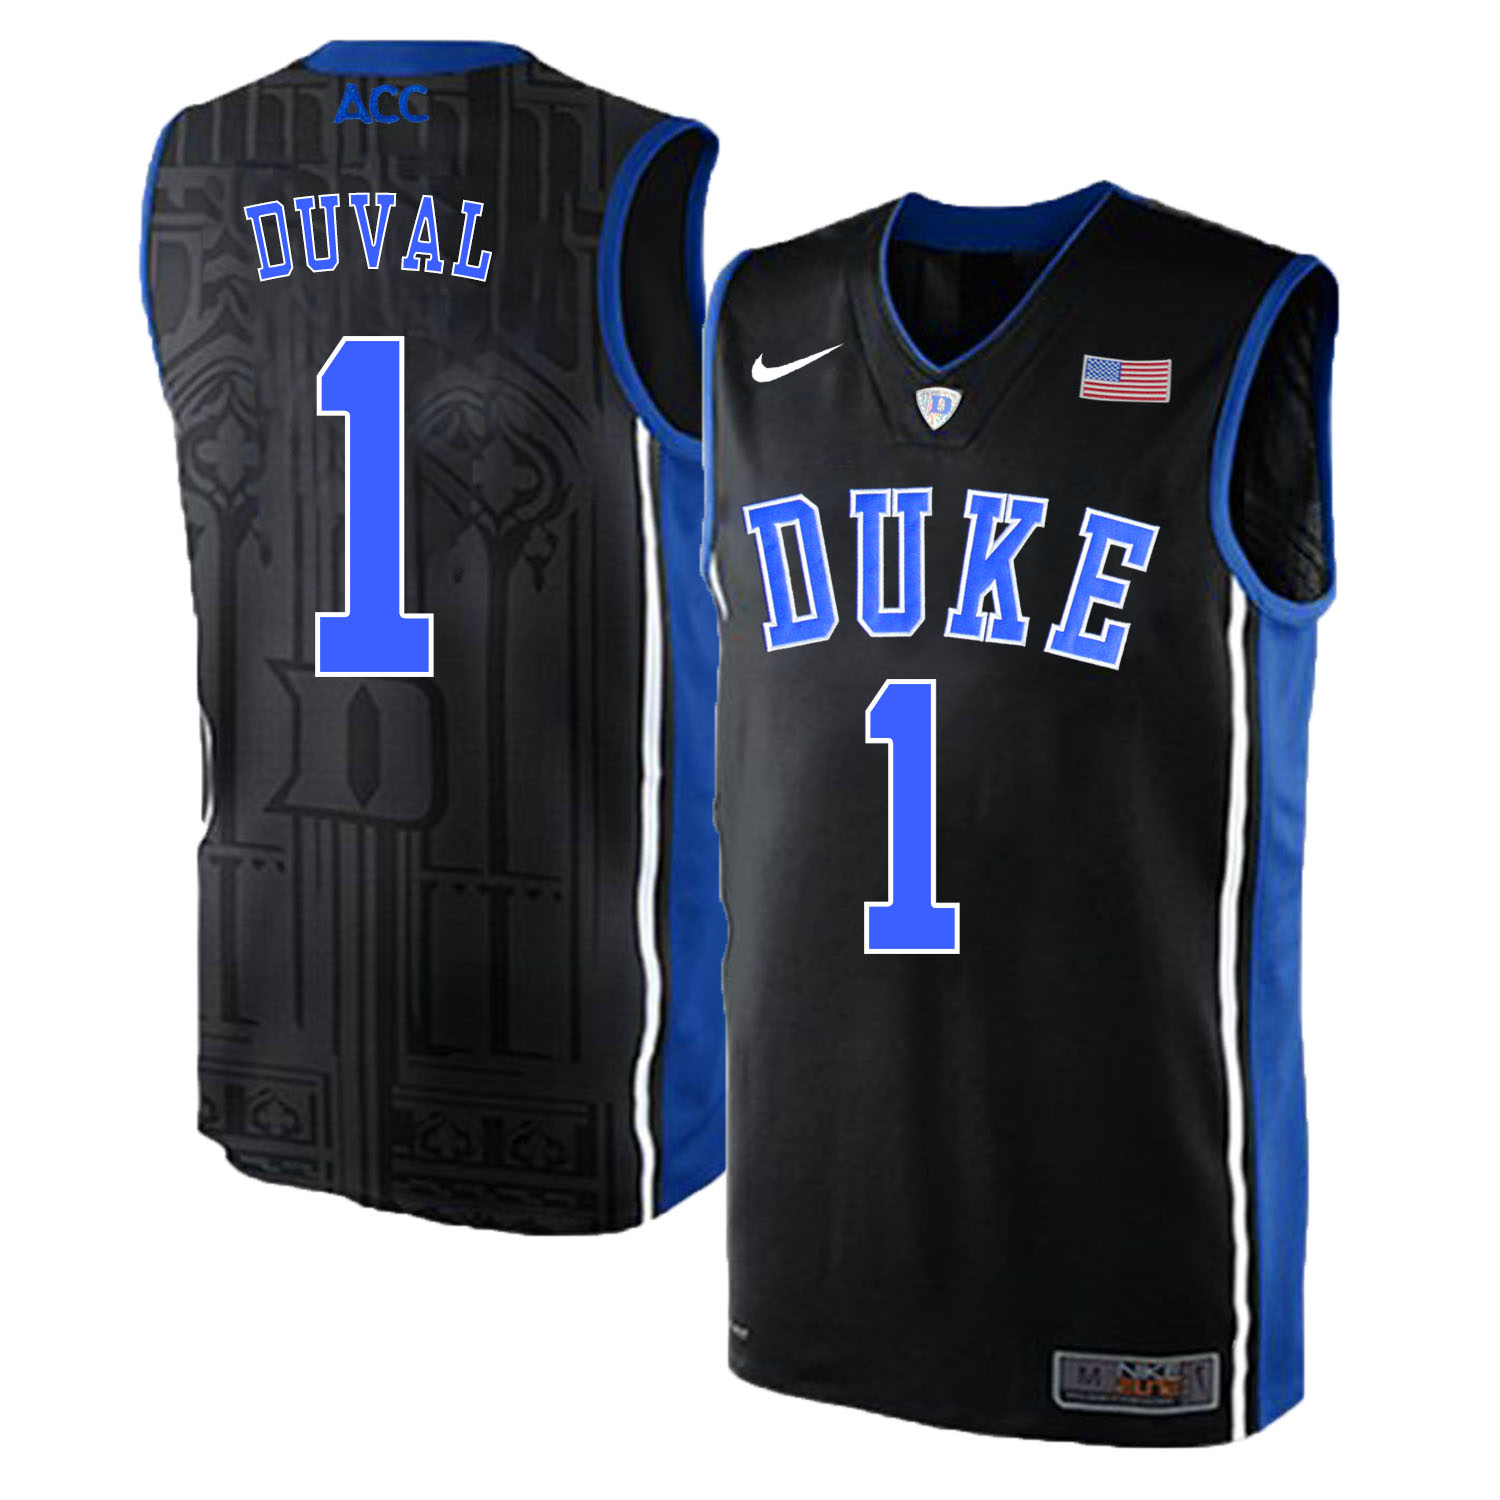 Duke Blue Devils 1 Trevon Duval Black Elite Nike College Basketabll Jersey